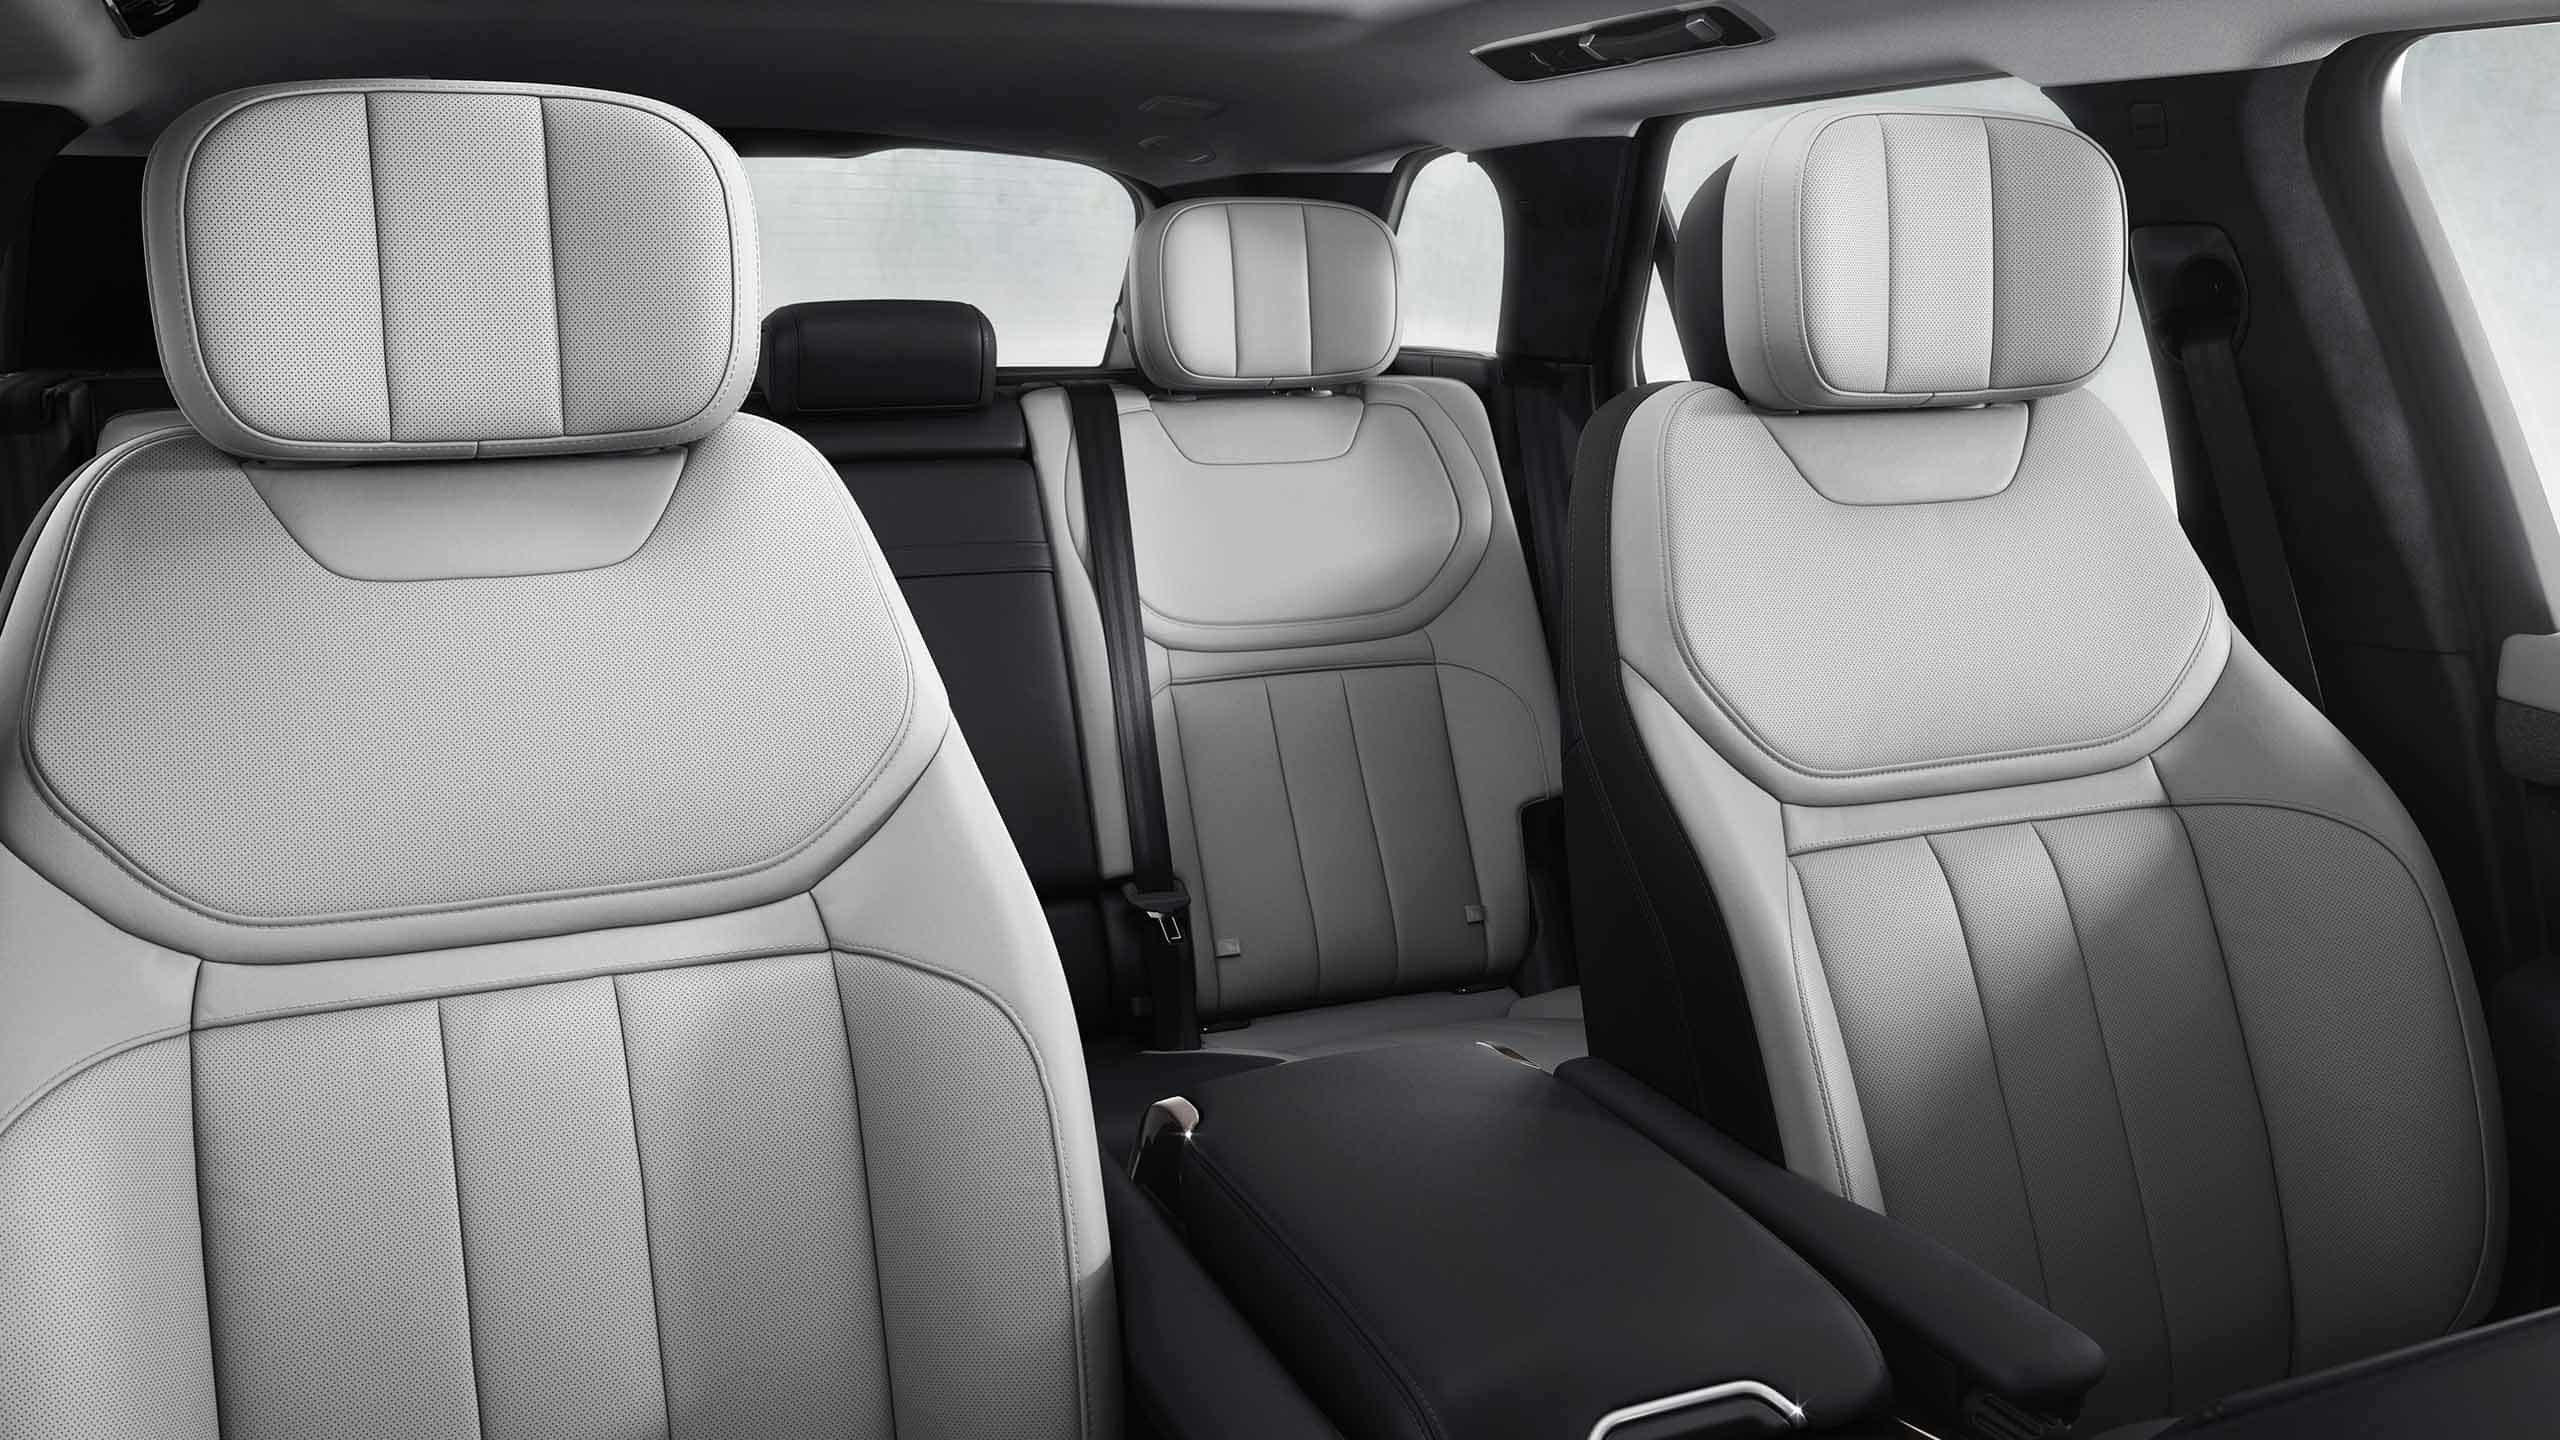 Range Rover Sport interior seats